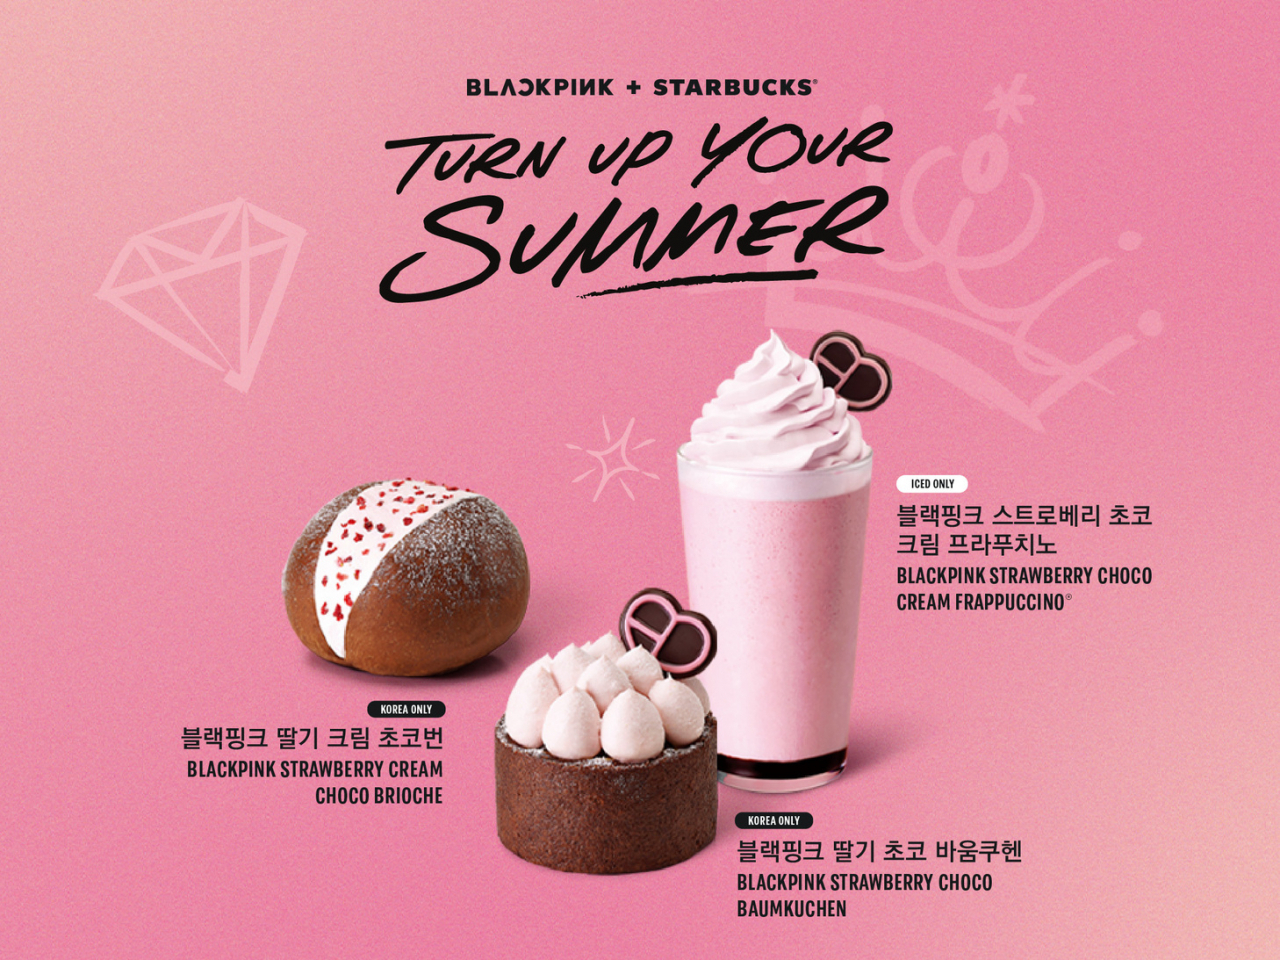 Starbucks' limited edition Blackpink menu items (Starbucks Korea)